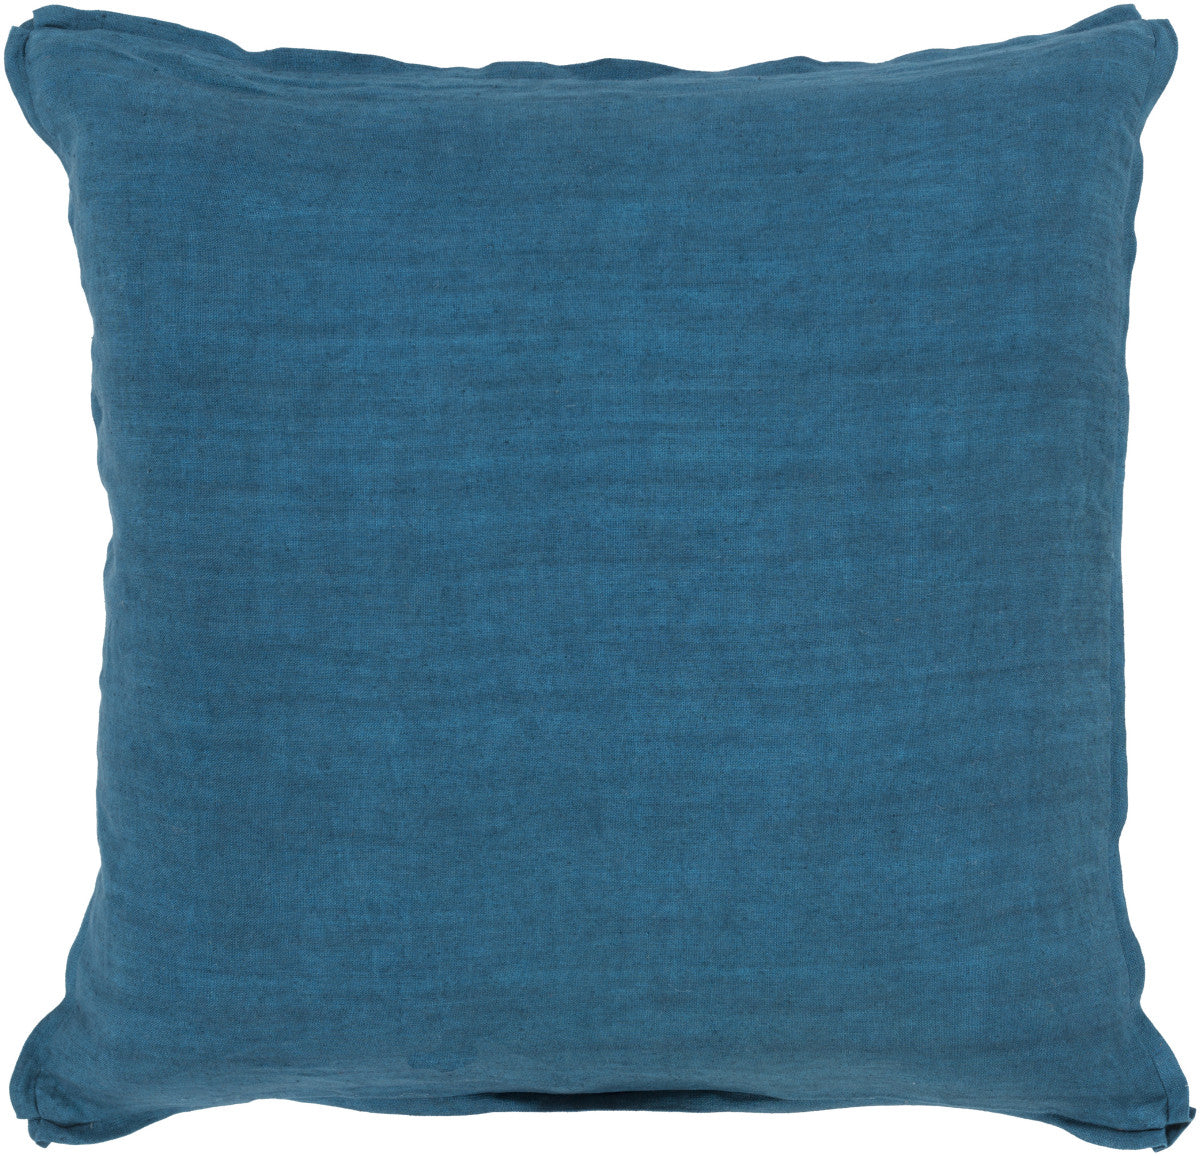 Surya Solid Luxury in Linen SL-006 Pillow